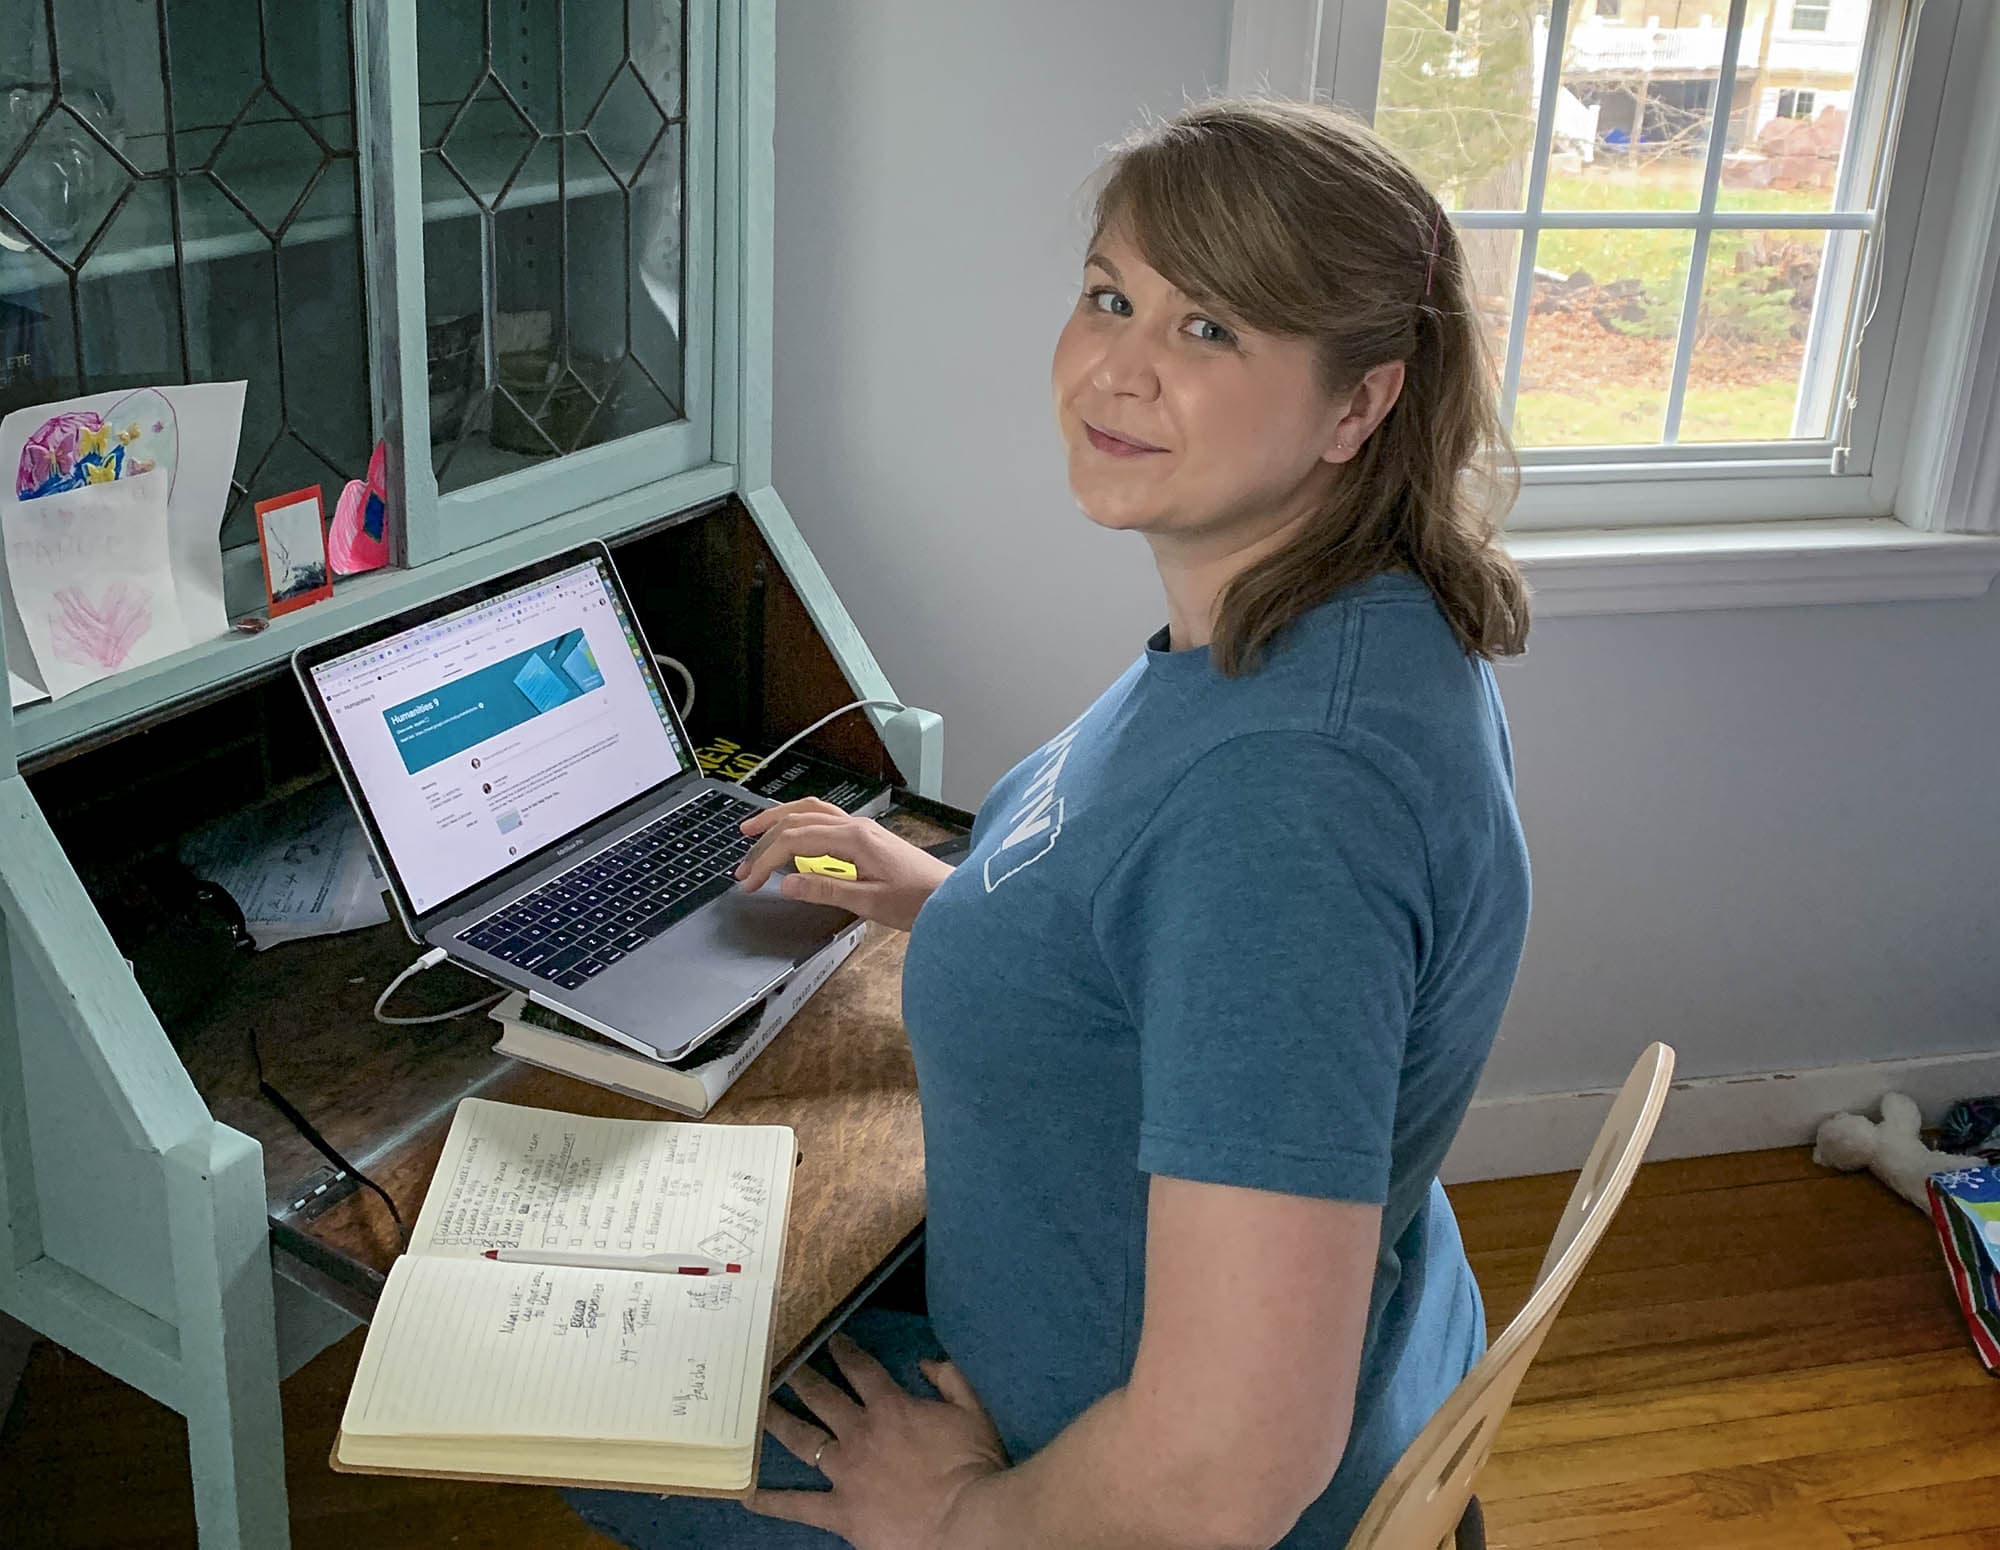 Sydney Chaffee, a humanities teacher at the Codman Academy, works on a laptop. (Courtesy, Sydney Chaffee)